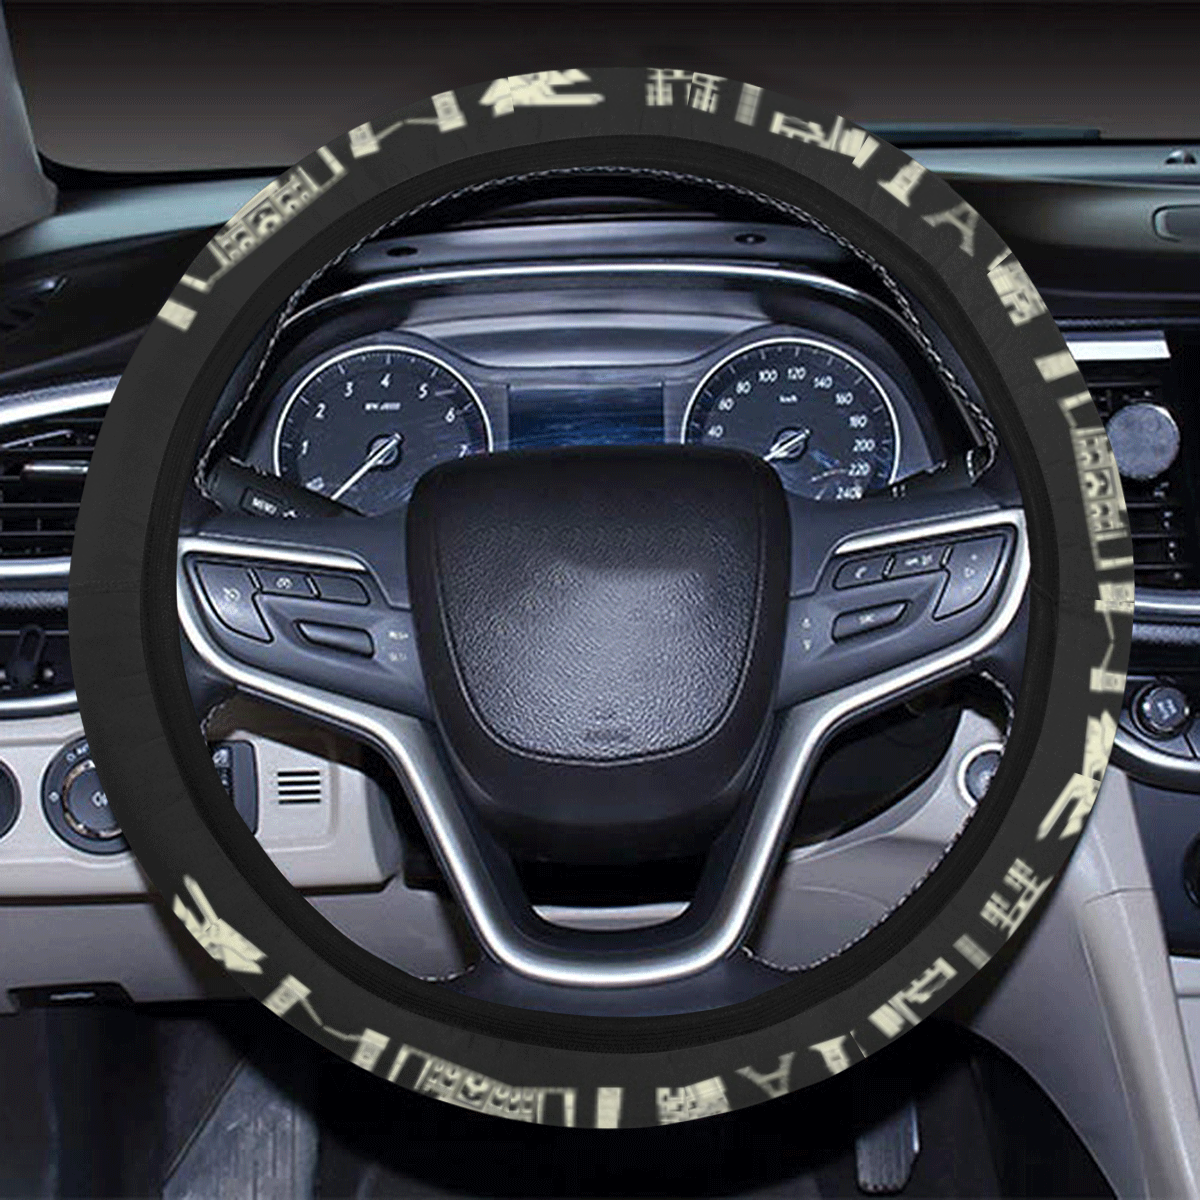 WORLD Steering Wheel Cover with Elastic Edge